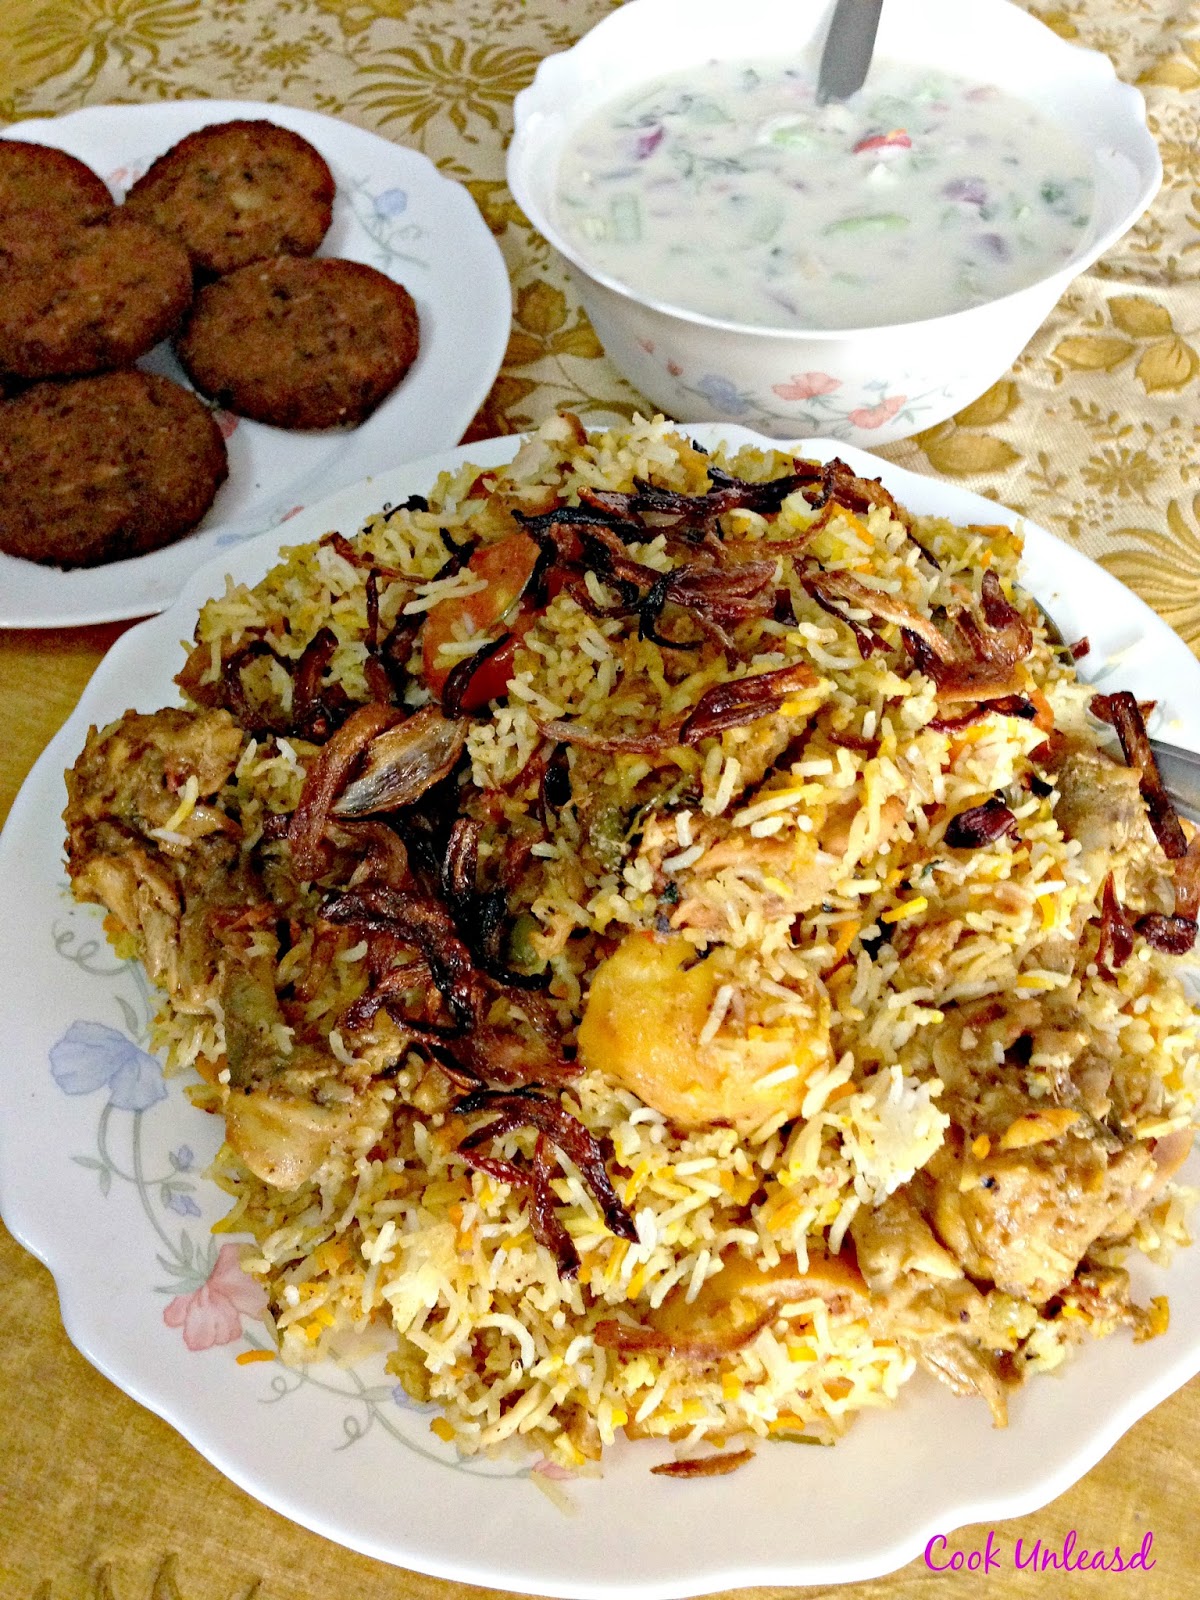 Cook Unleashed: Chicken Biryani With Raitha